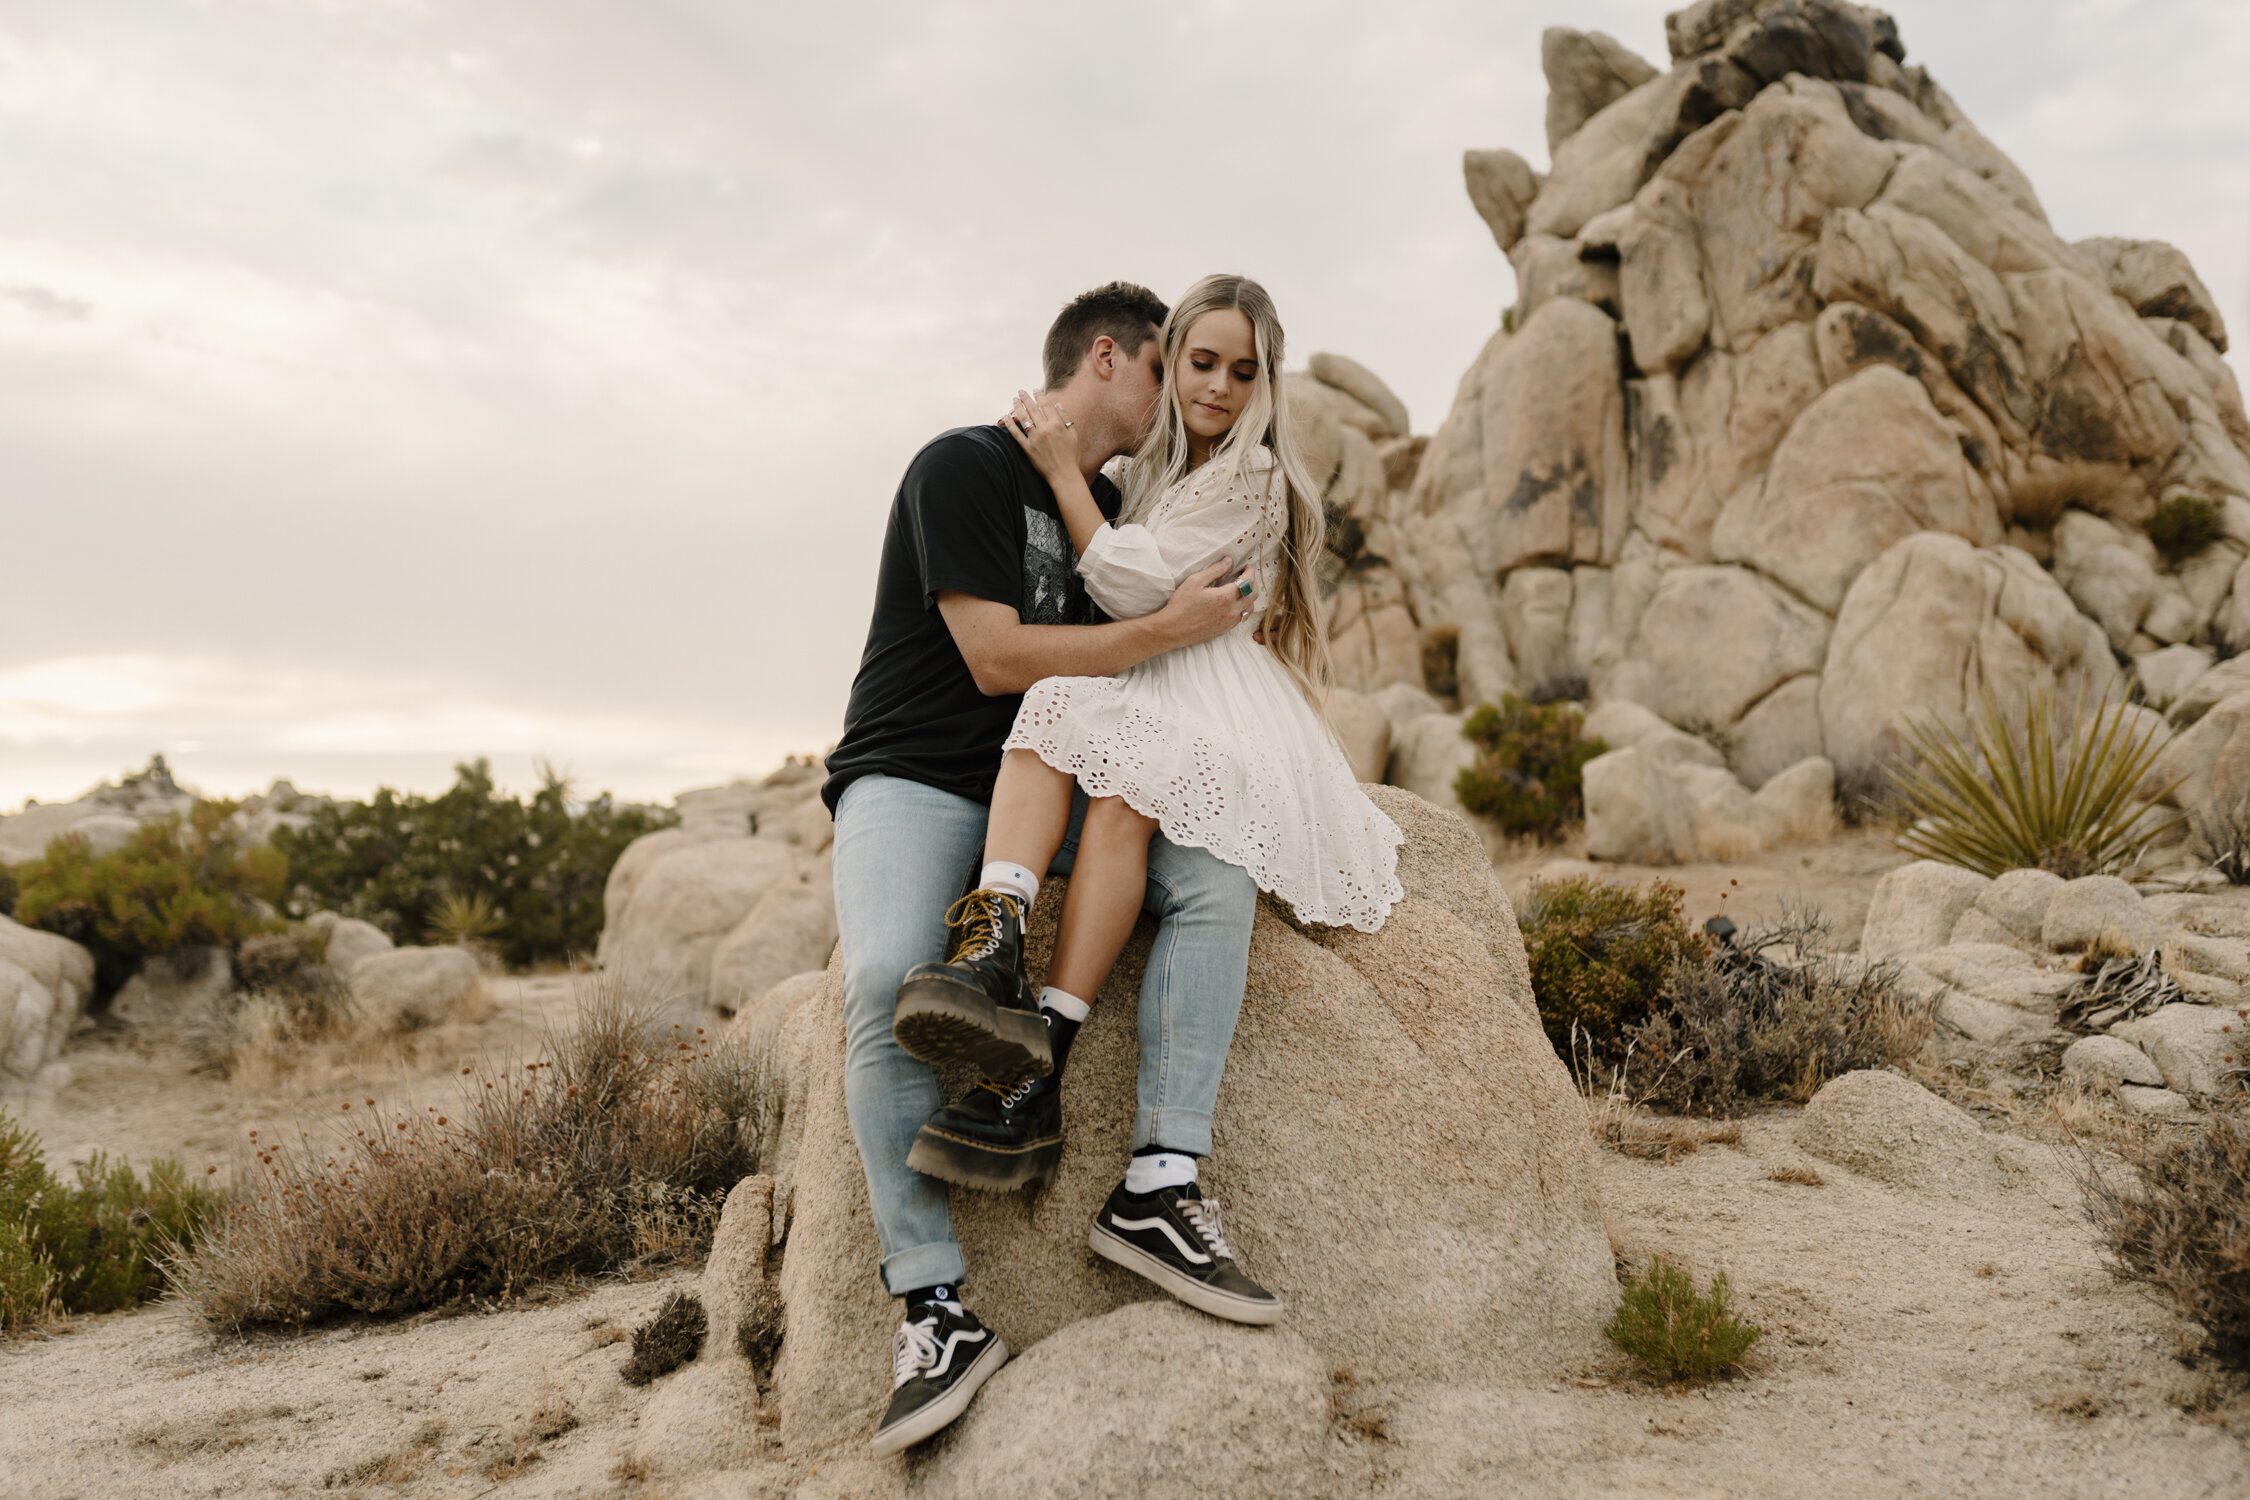 Kayli LaFon Photography | Destination Wedding & Elopement Photographer